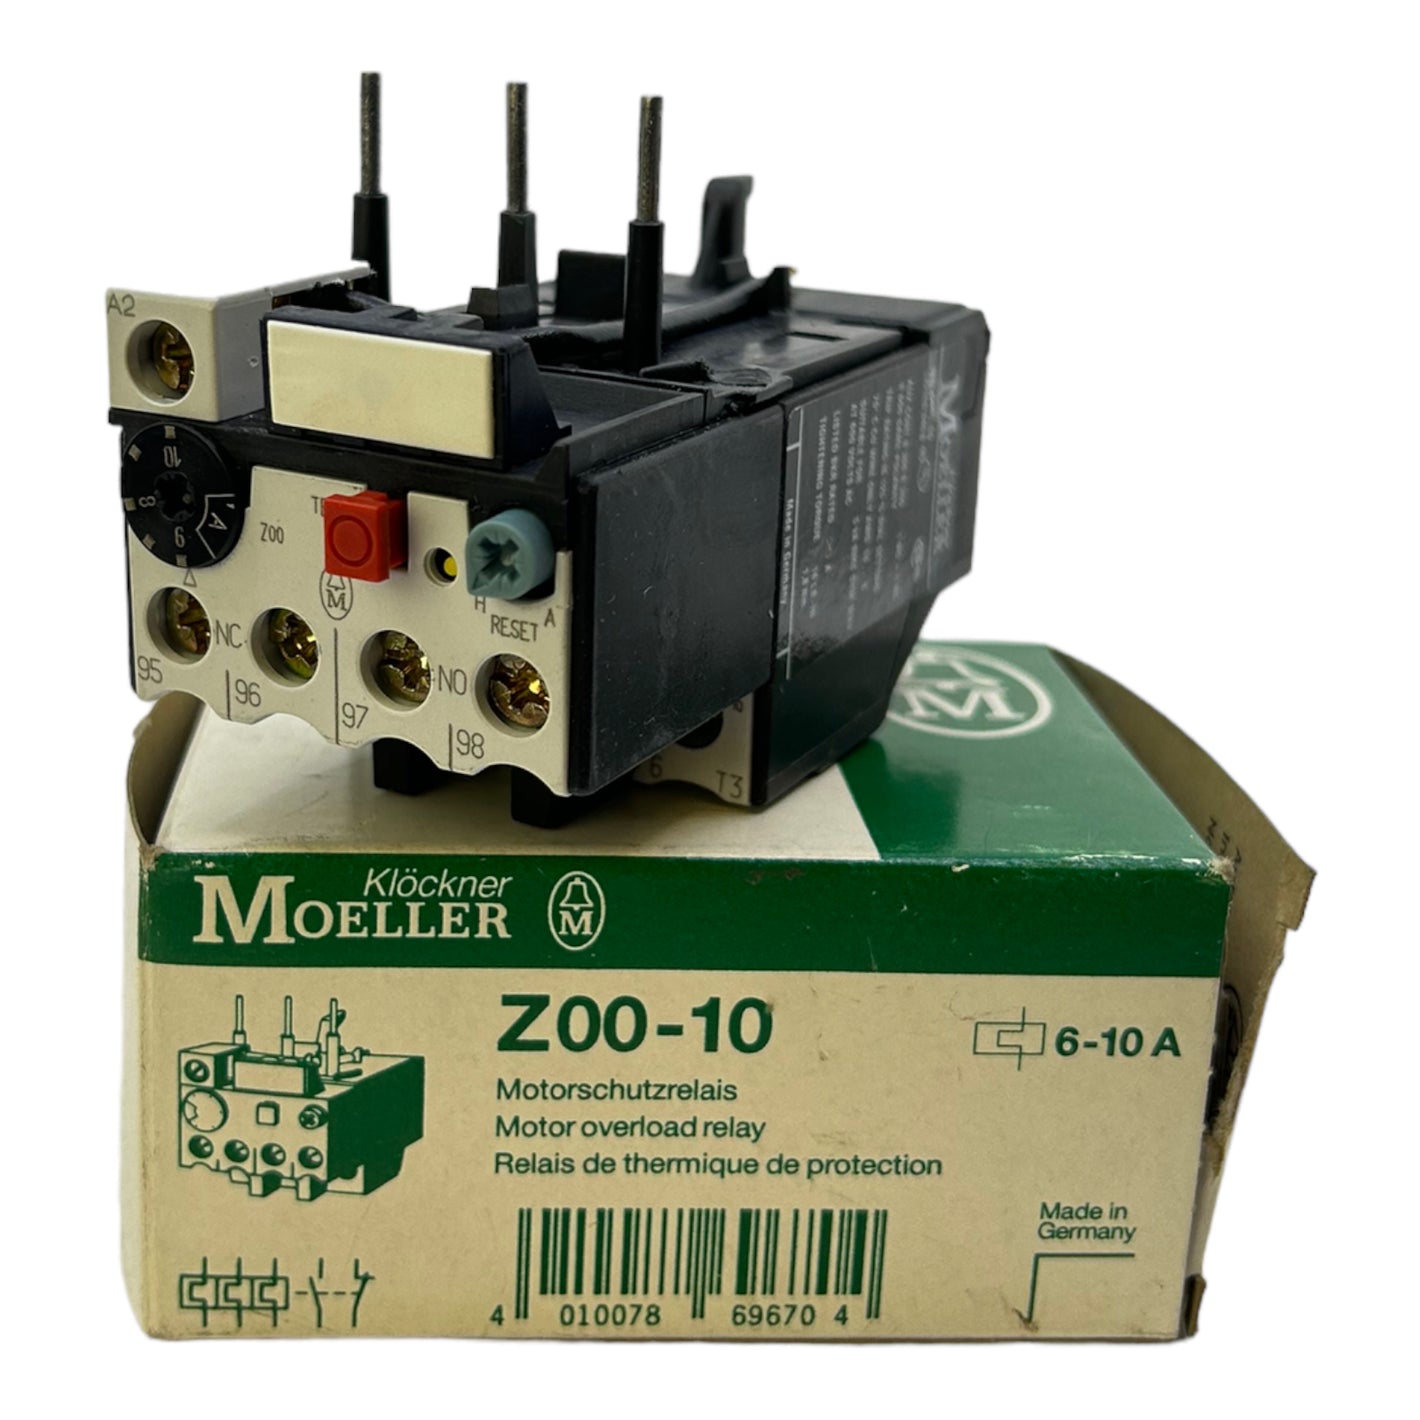 Klöckner Moeller Z00-10 Motorschutzrelais 220/240V AC 6-10A 1NO + 1NC Relais